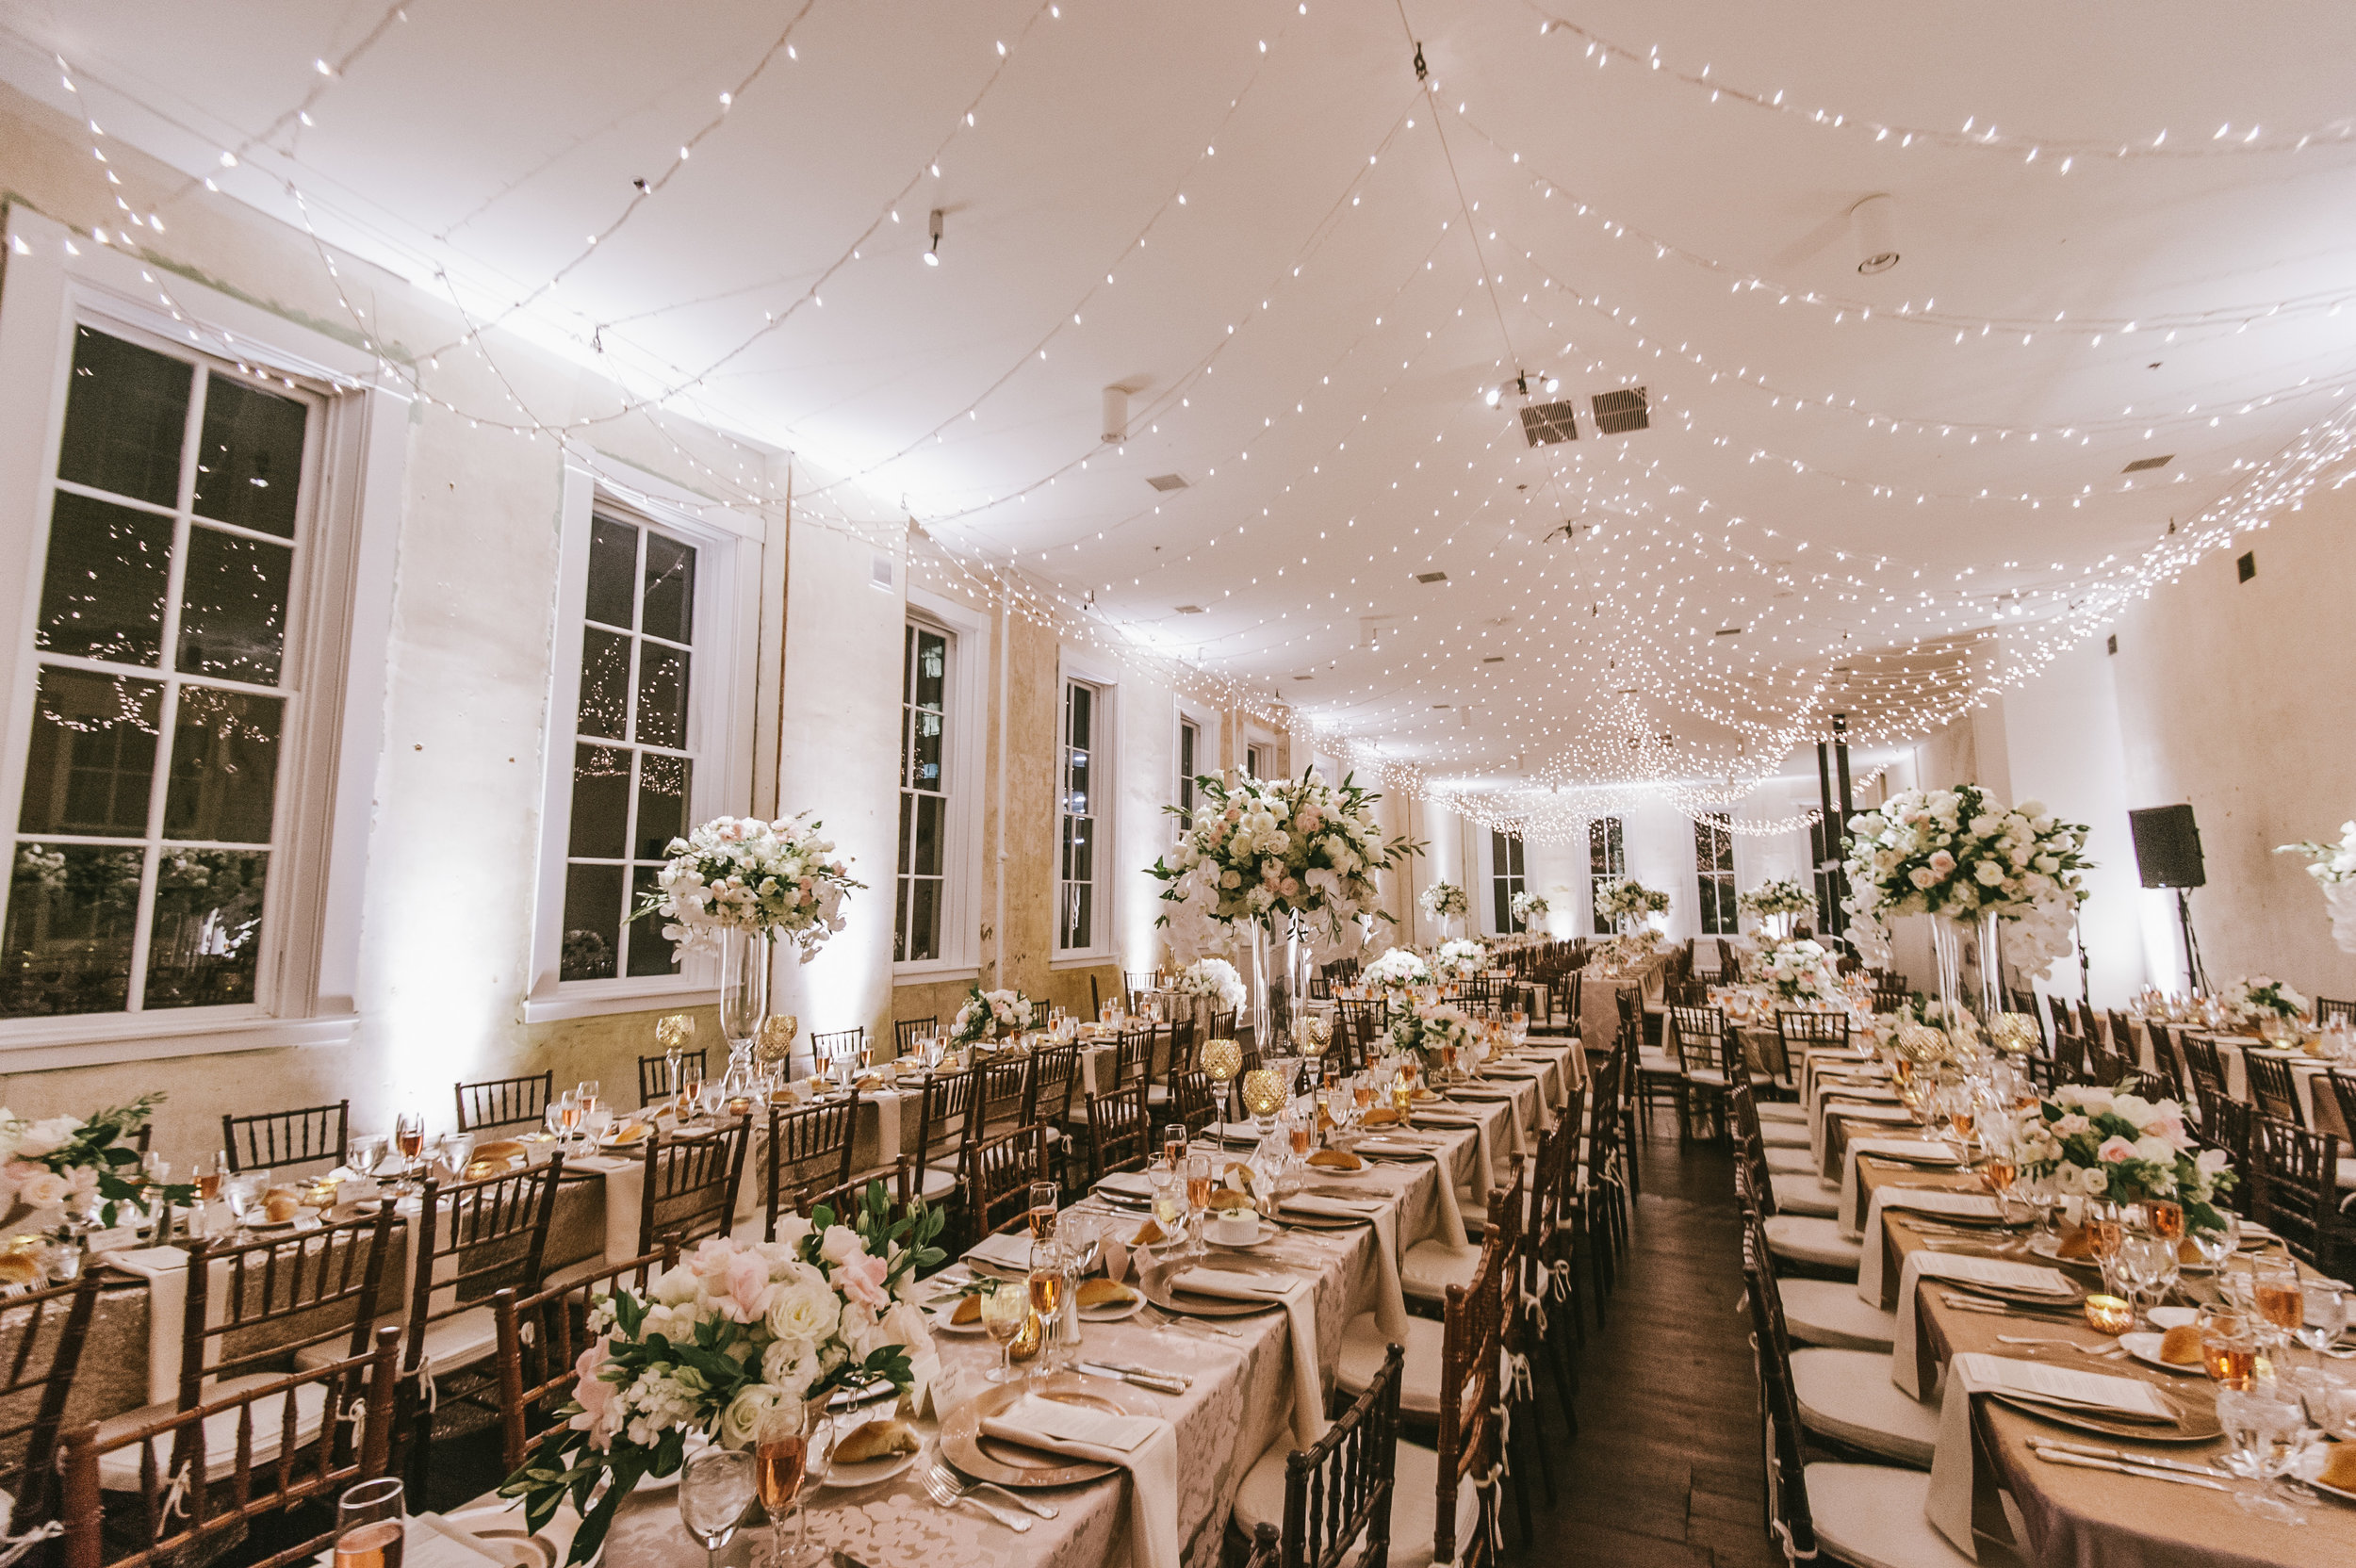 Elegant and extravagant wedding dinner set up in Empire Room of Excelsior wedding venue